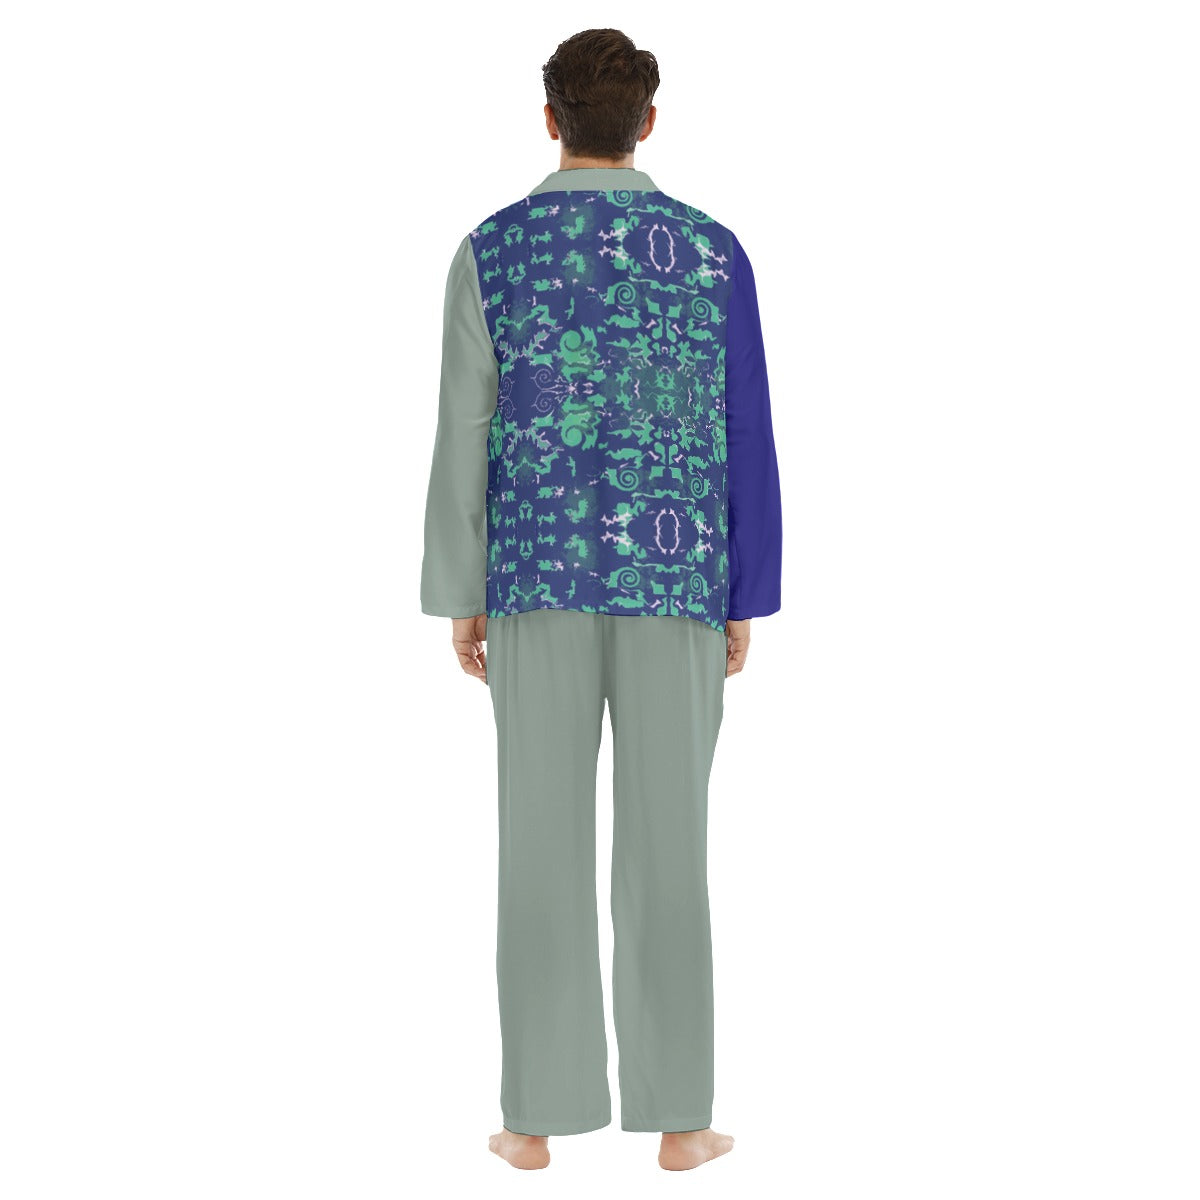 Men's Lapel Pajama Set